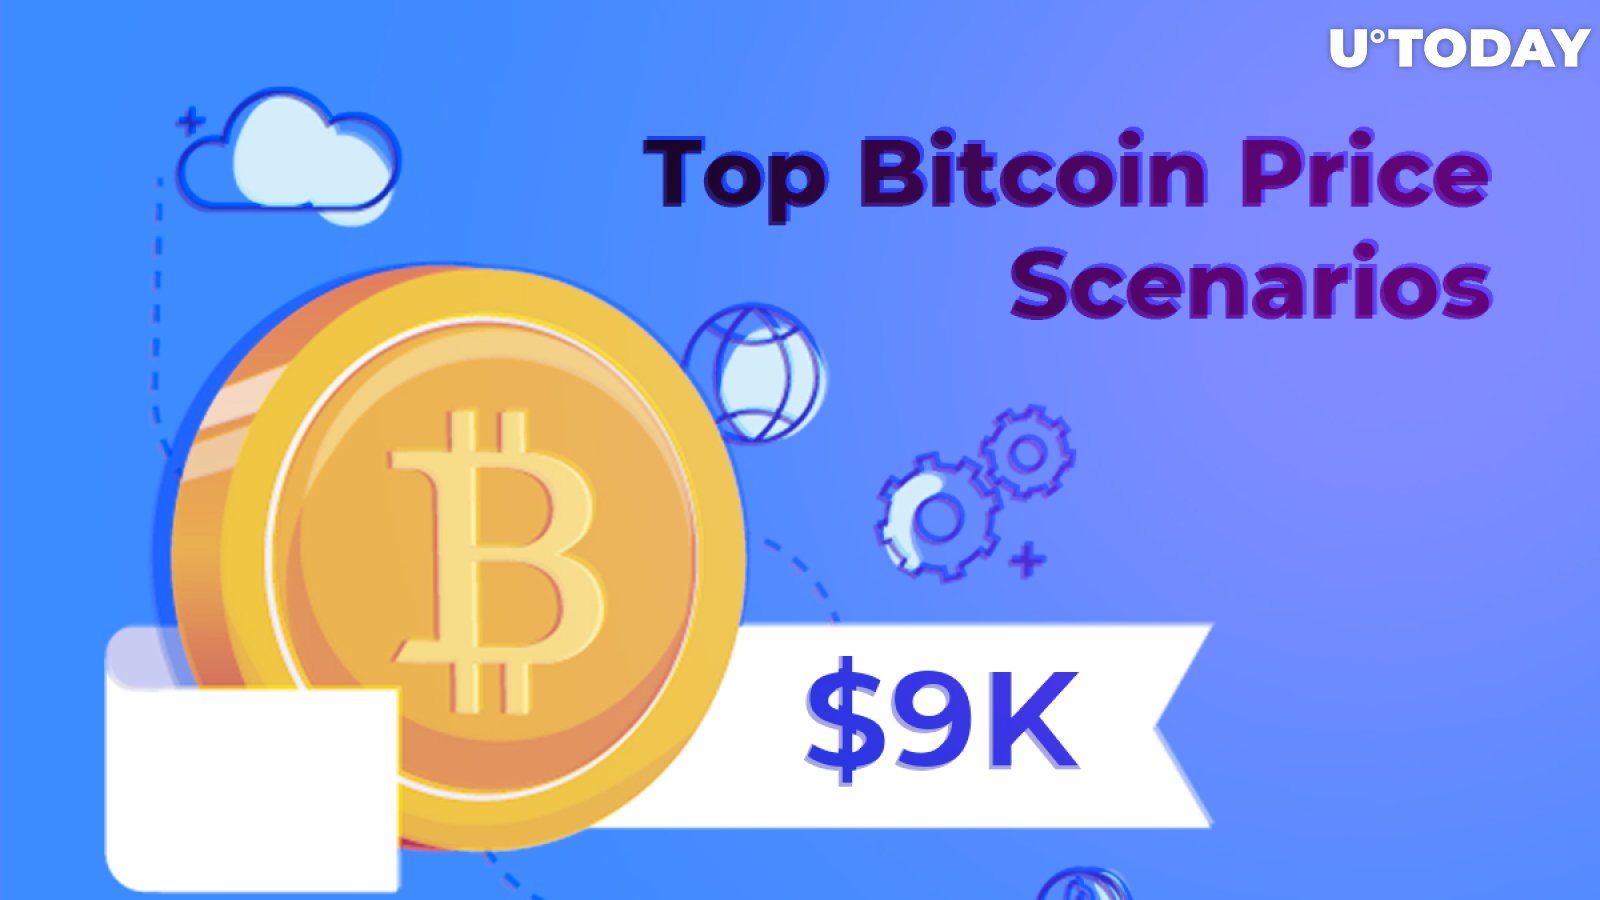 Bitcoin (BTC) Price Is Predicted to Reach $9K Soon – Top Bitcoin Price Scenarios May 2019